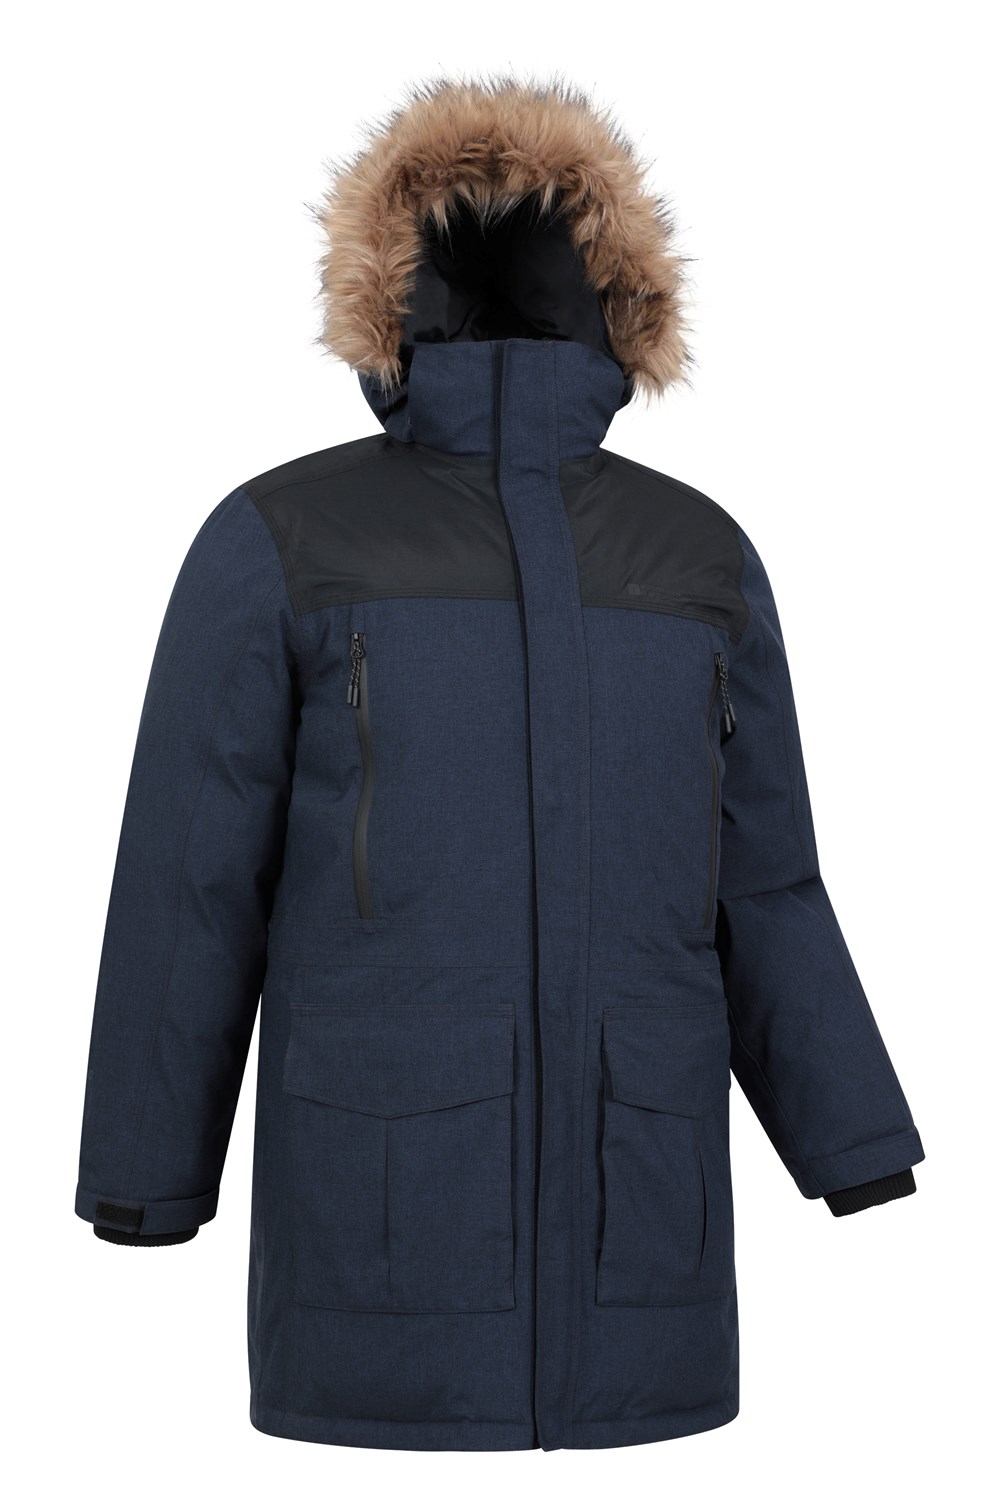 Mountain Warehouse Mens Waterproof Down Parka Jacket Winter Rain Coat ...